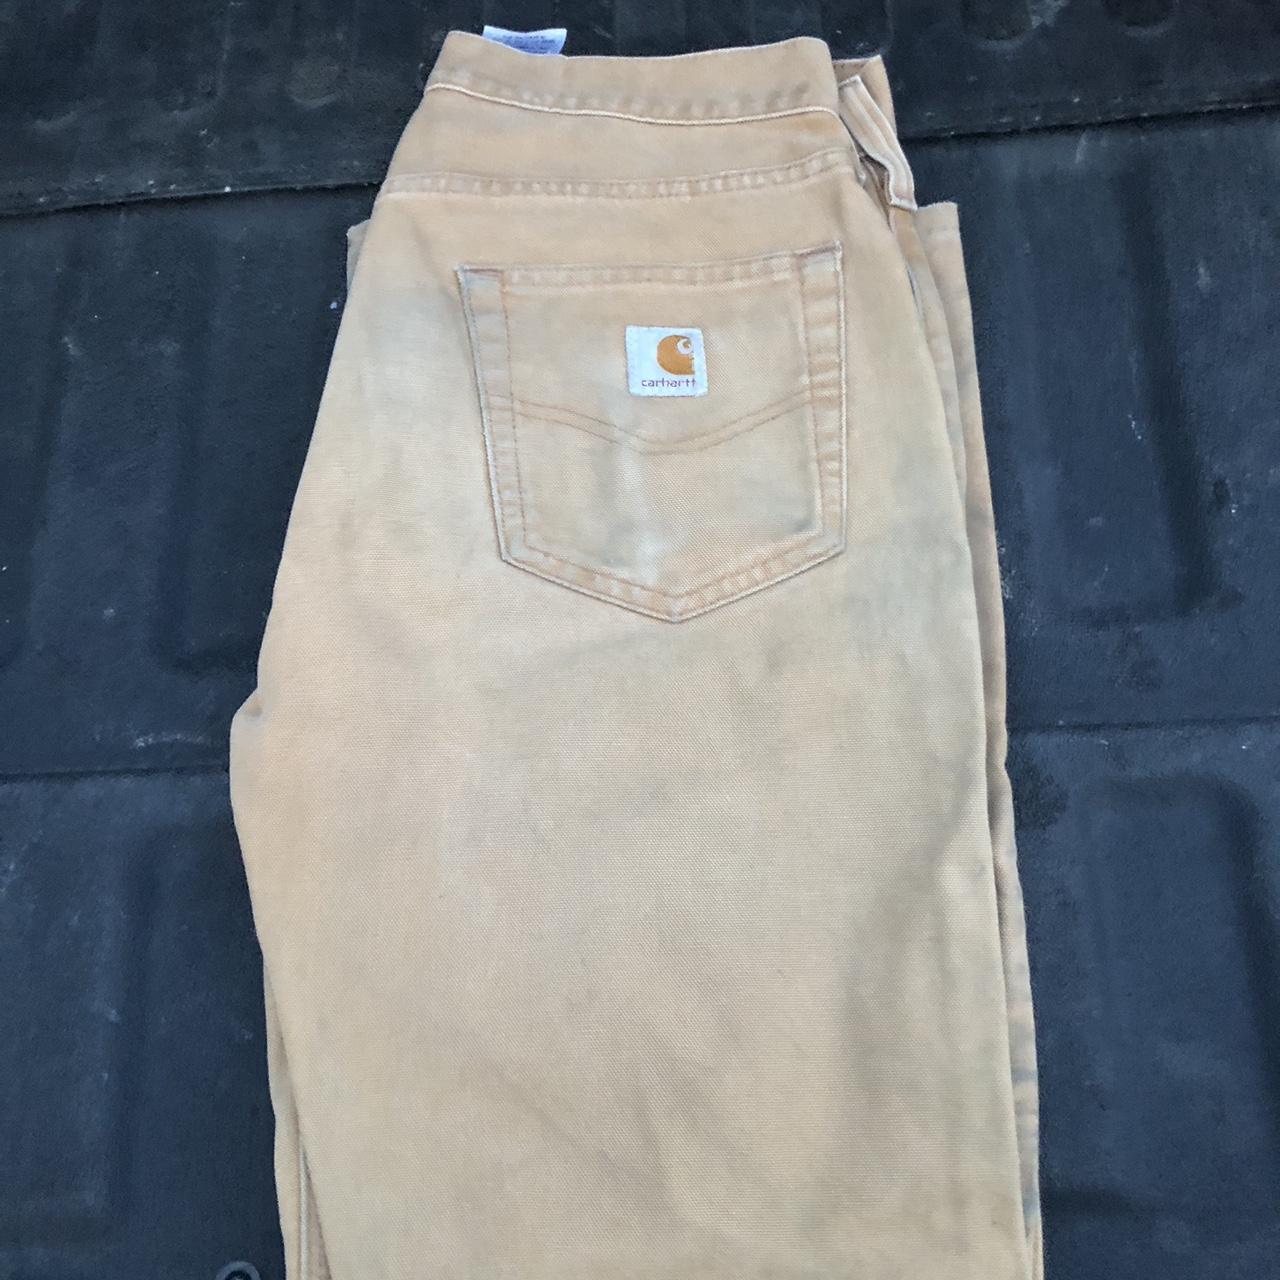 Vintage Distressed carhartt Pants size 30x32... - Depop